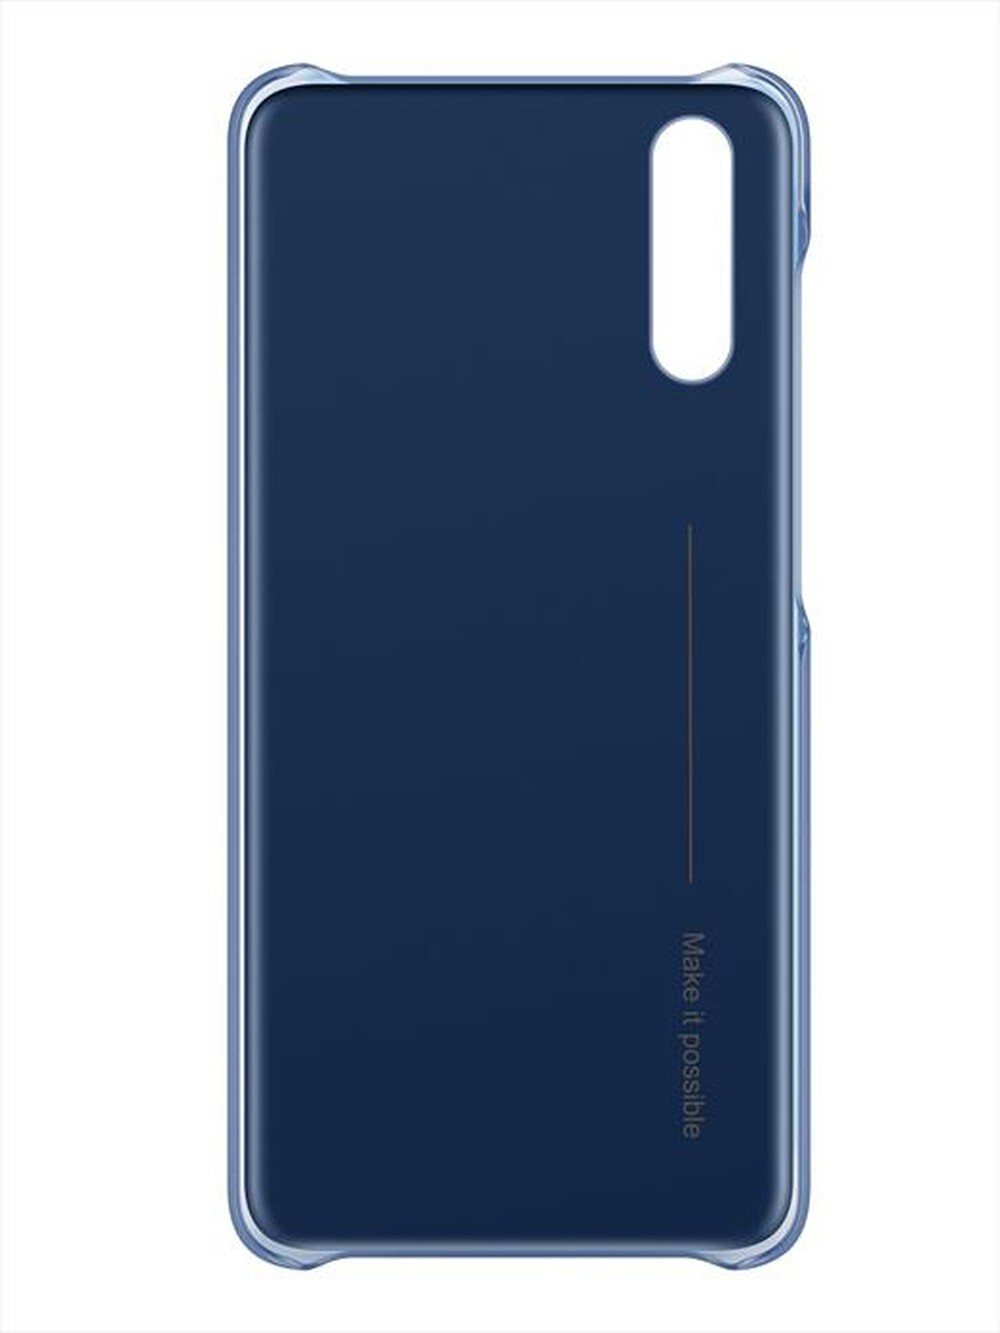 "HUAWEI - P20 Color Hard Case-Blu"